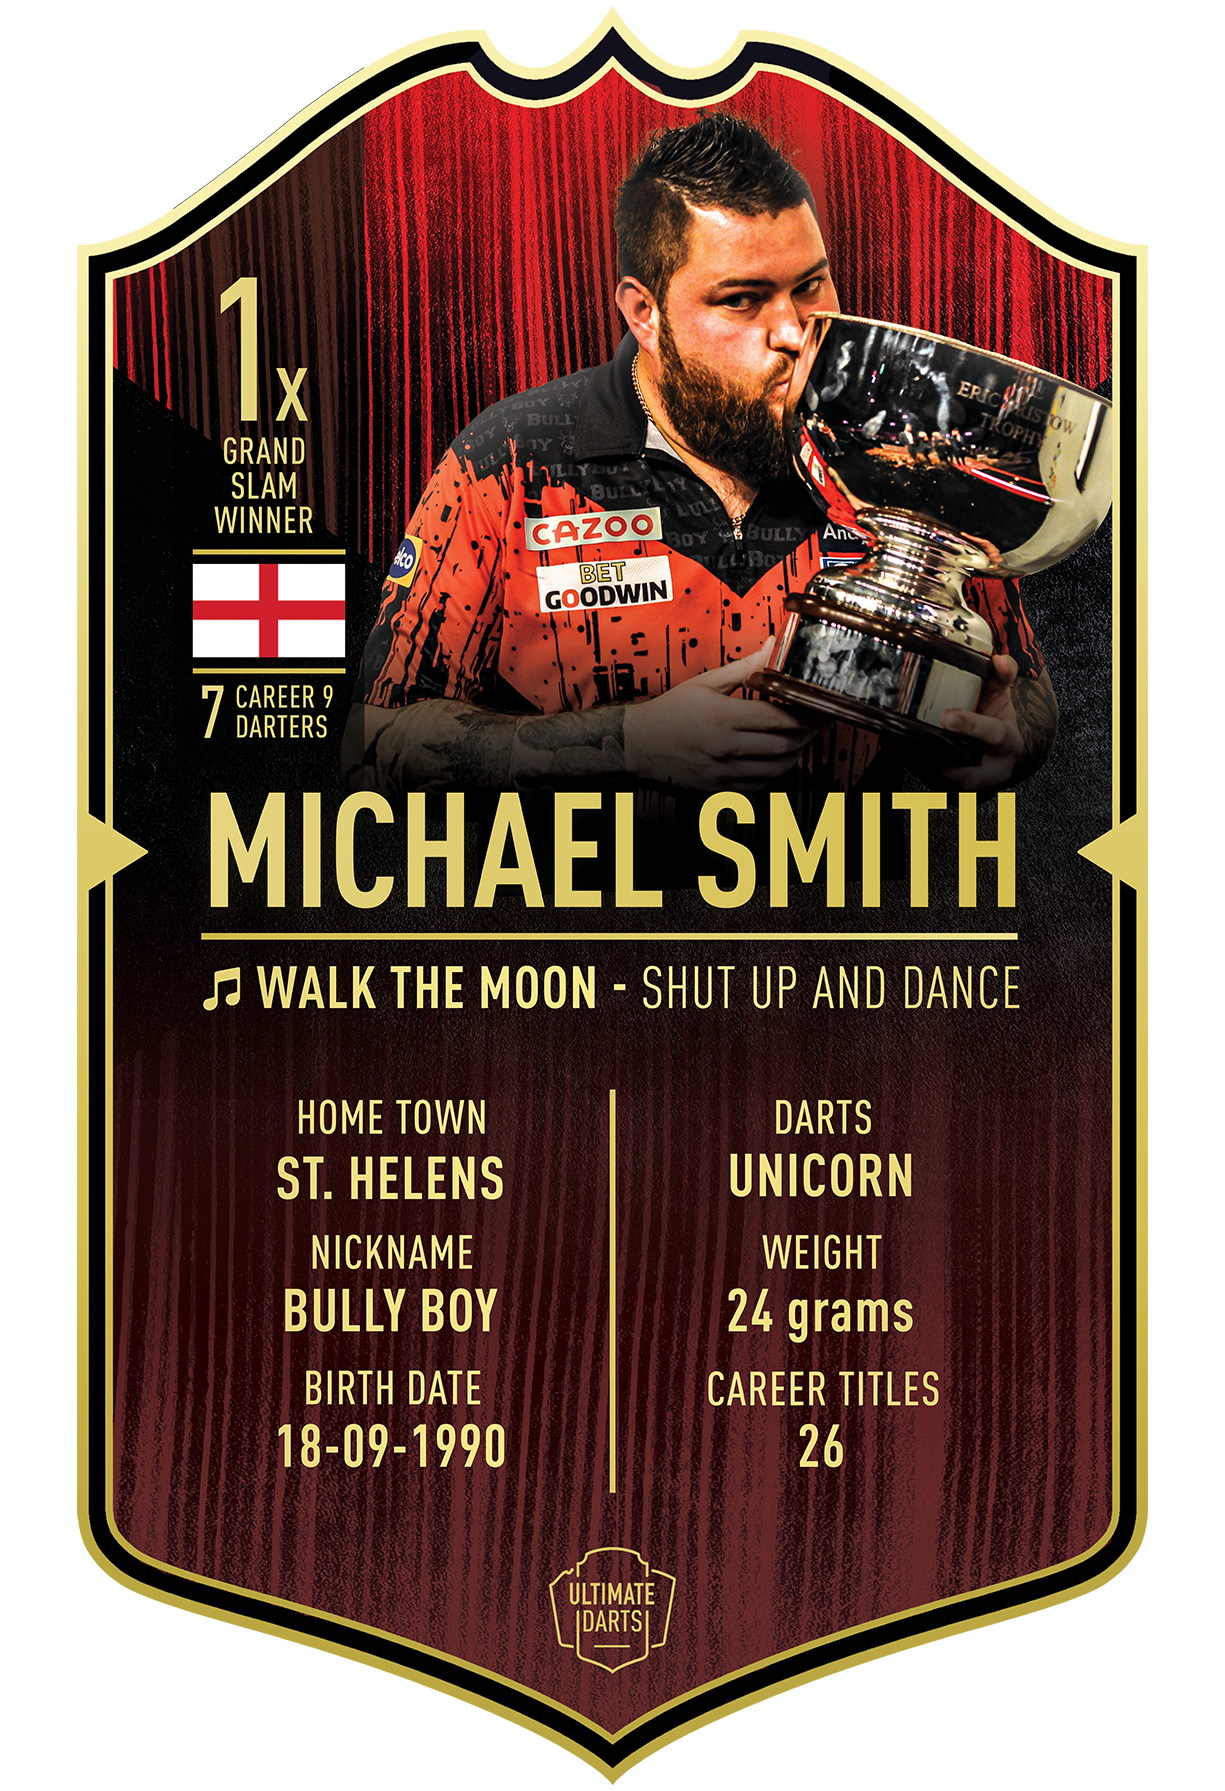 MICHAEL SMITH GRAND SLAM 2022 WINNER ULTIMATE DARTS CARD - Ultimate Darts